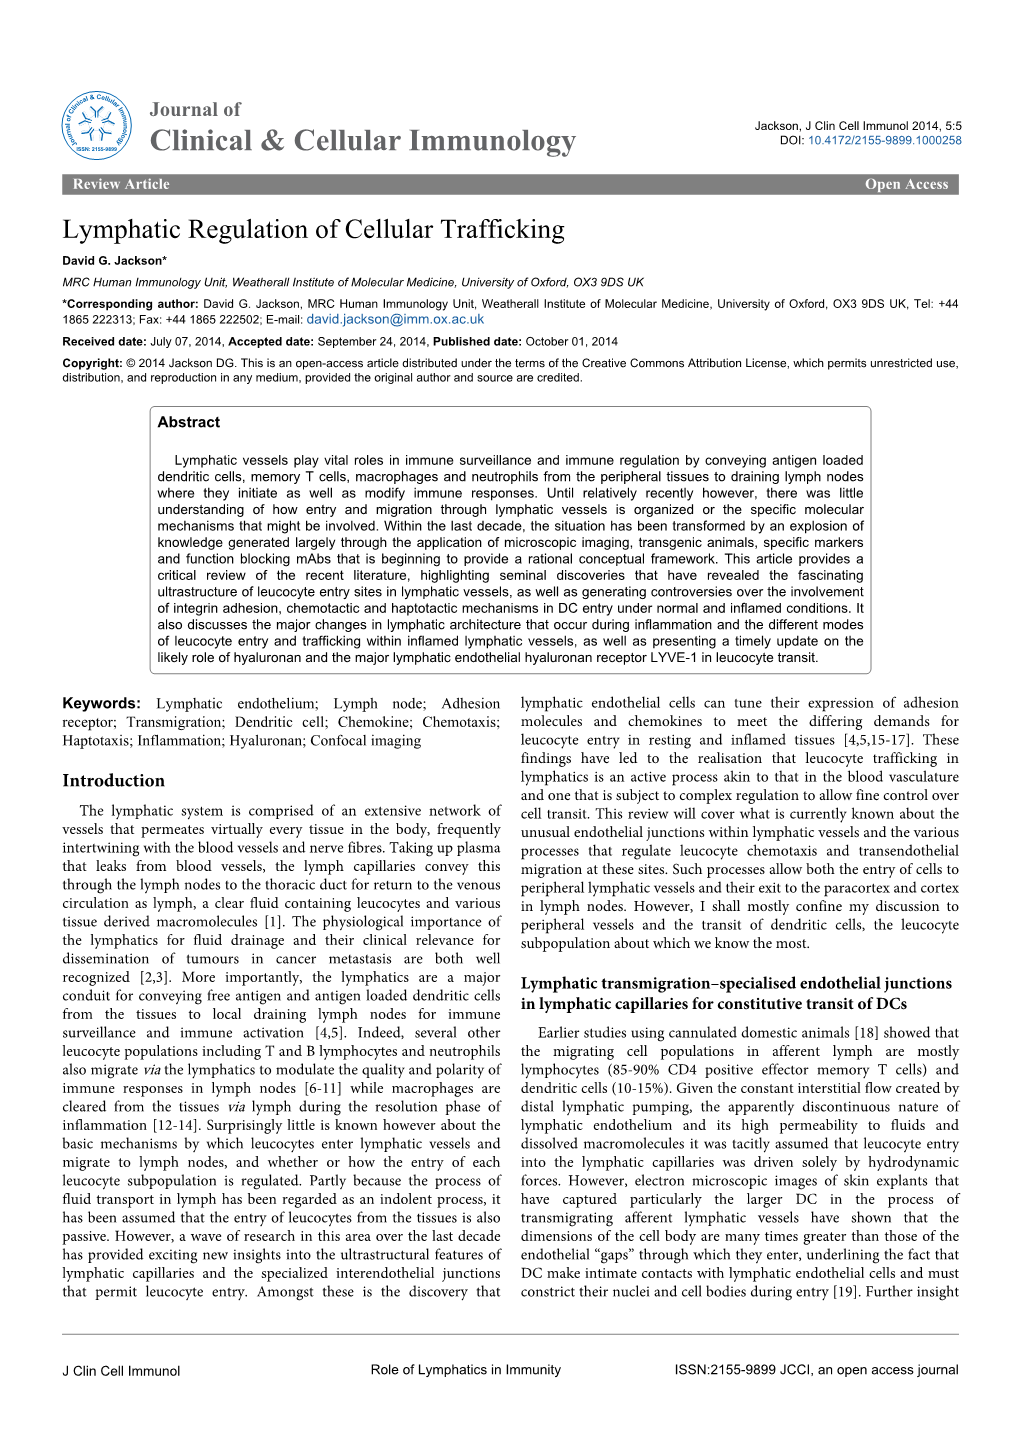 Lymphatic Regulation of Cellular Trafficking David G